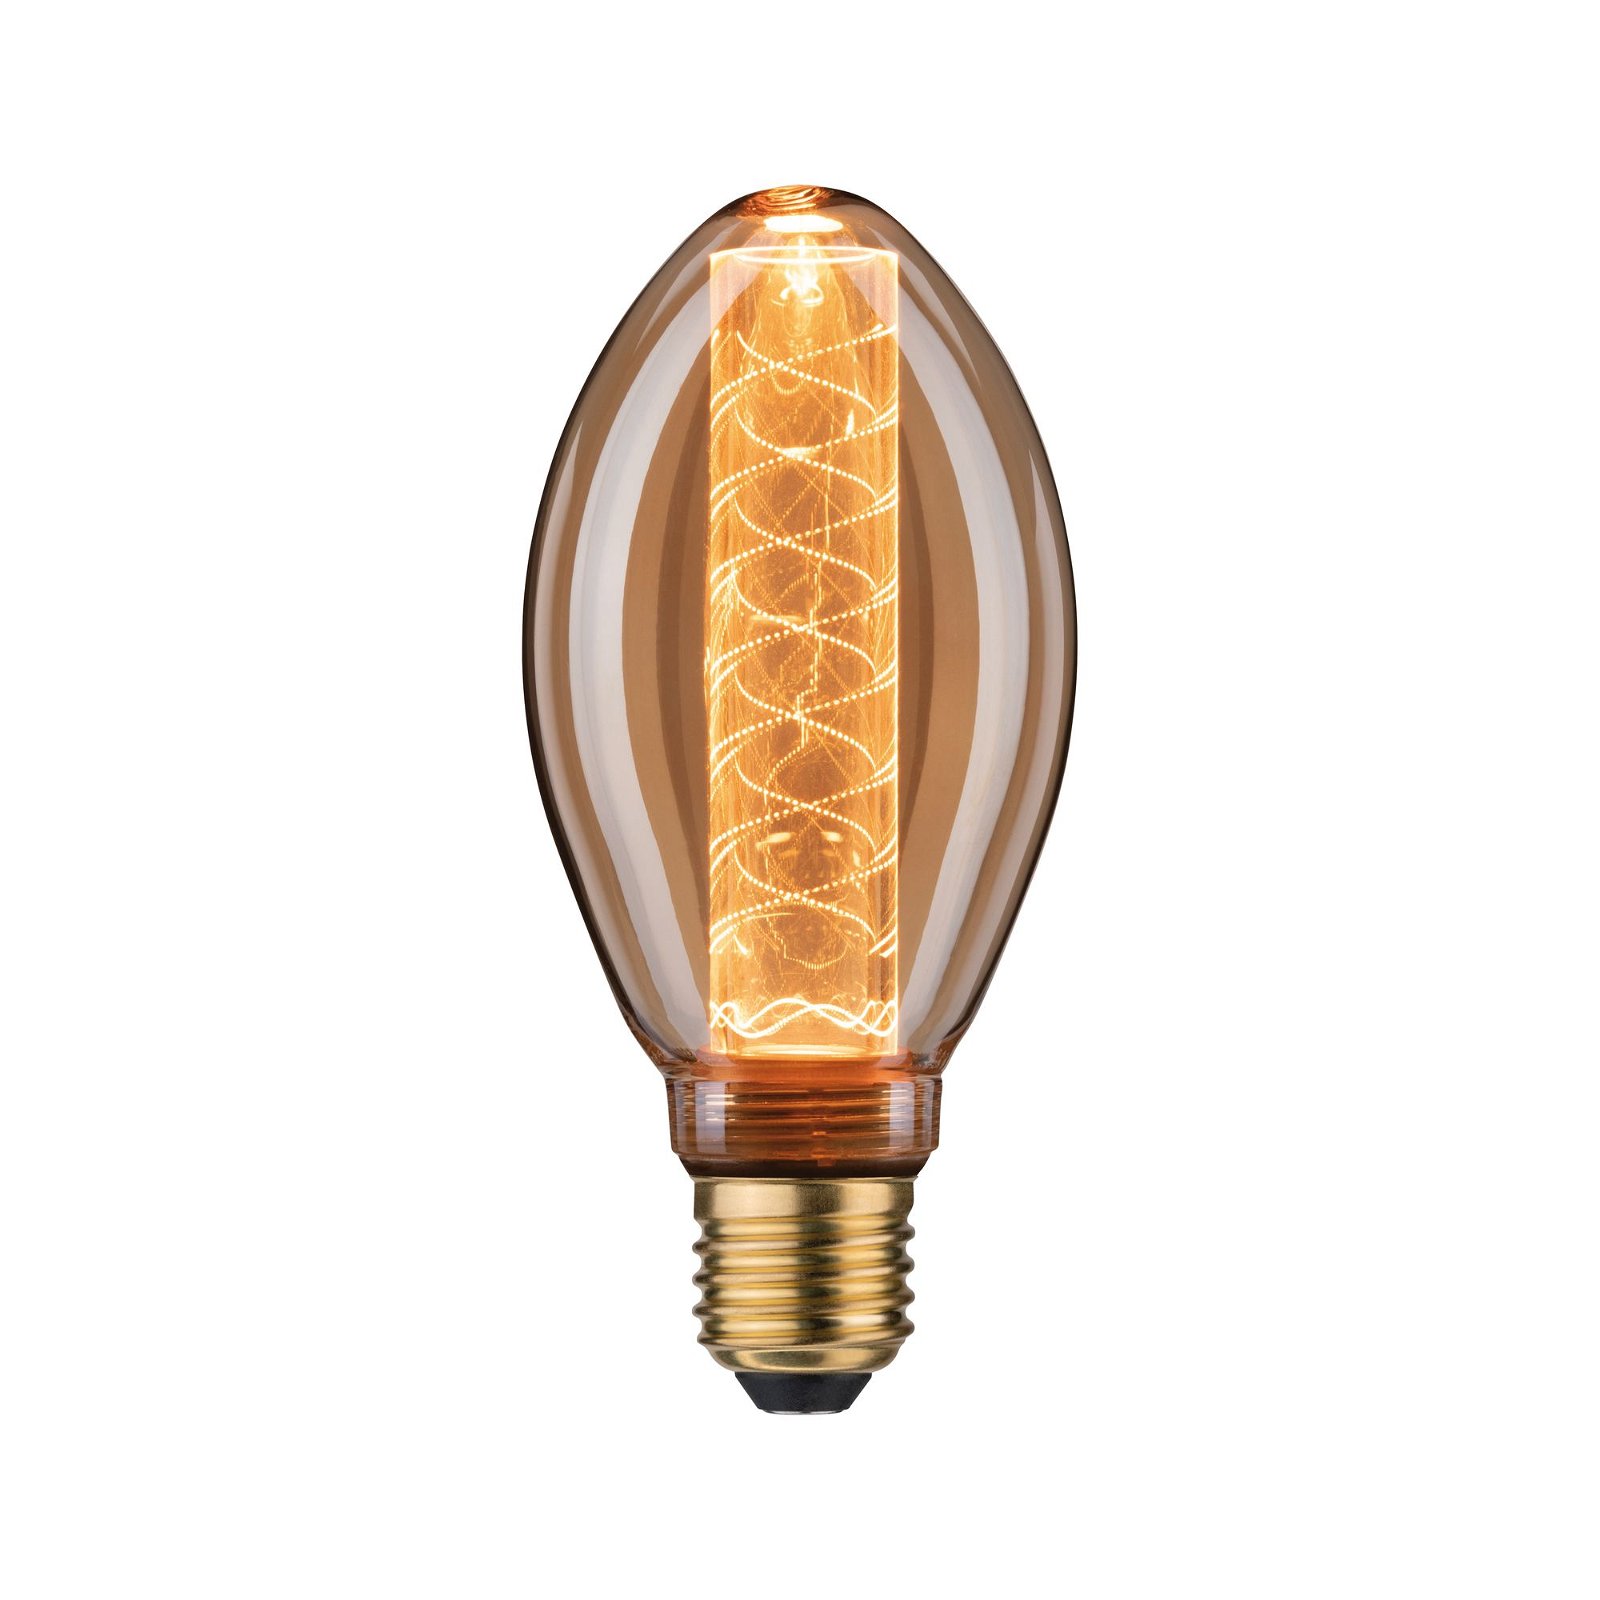 Inner Glow Edition LED-gloeilamp Binnenkolf spiraalpatroon E27 230V 120lm 3,6W 1800K dimbaar Goud